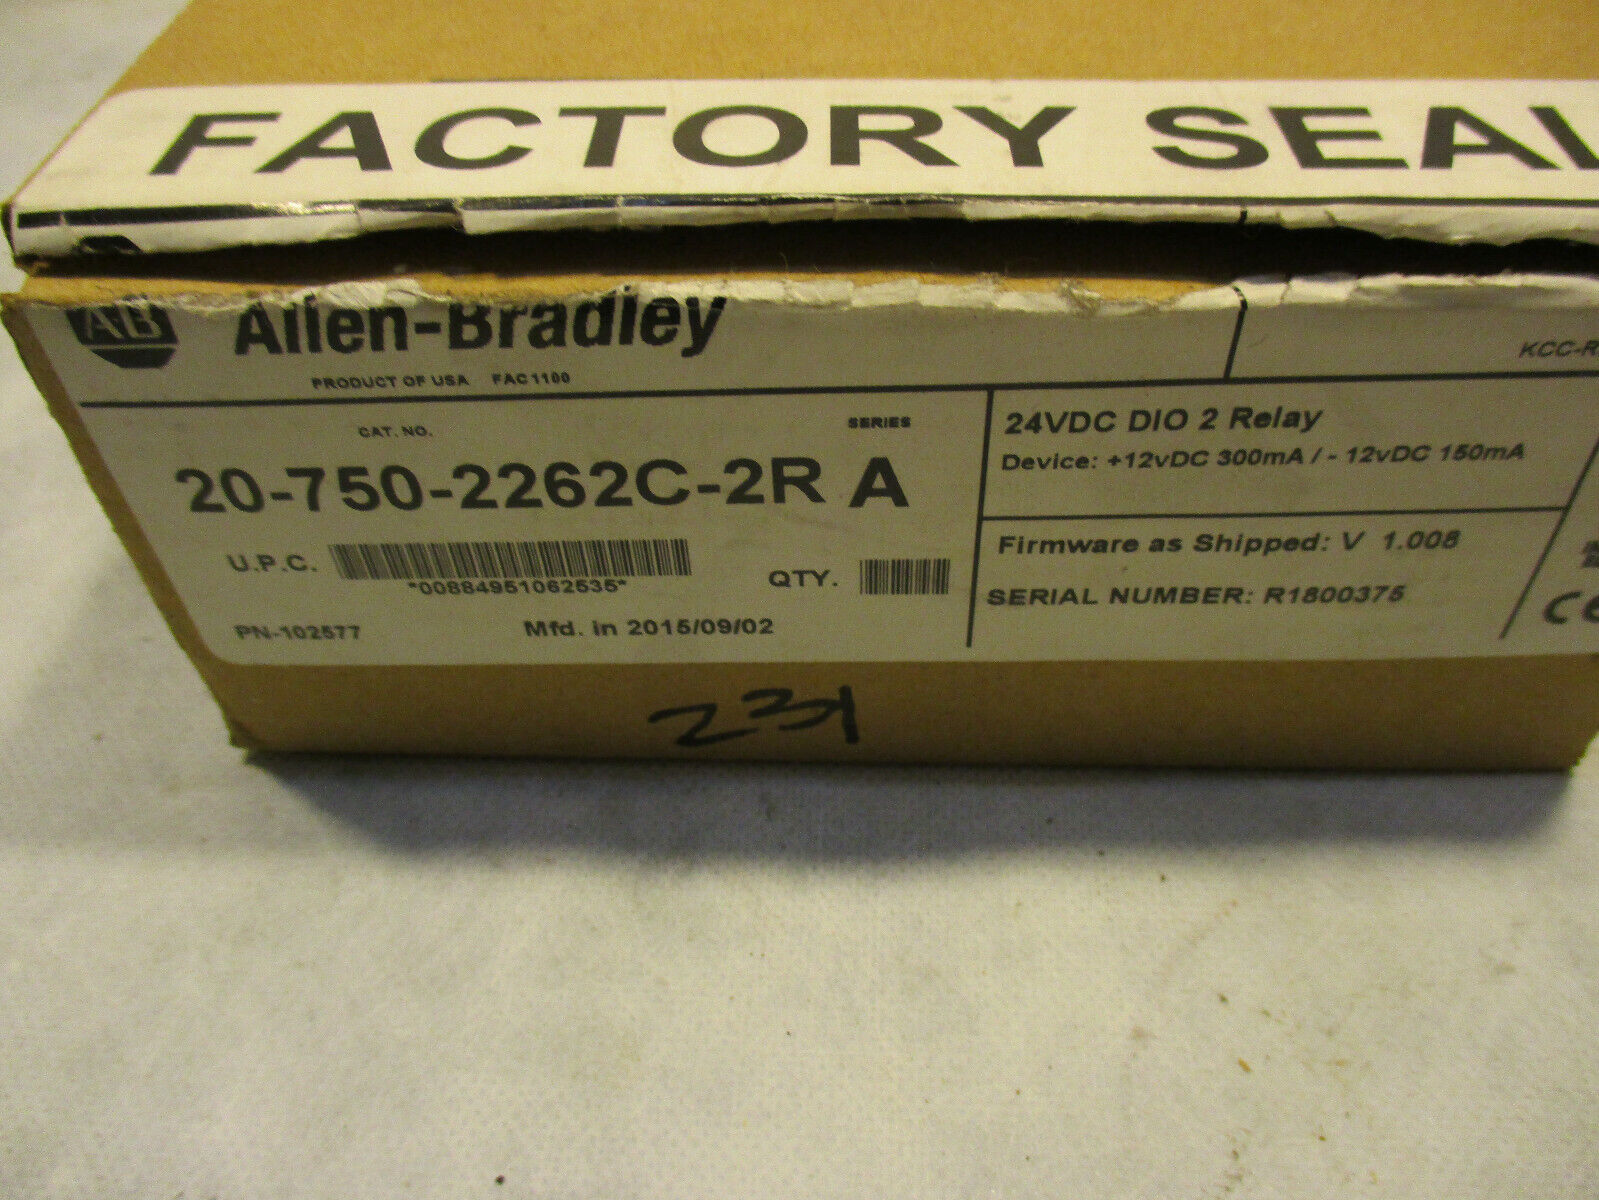 Allen Bradley 20-750-2262C-2RA Input/Output PLC Module